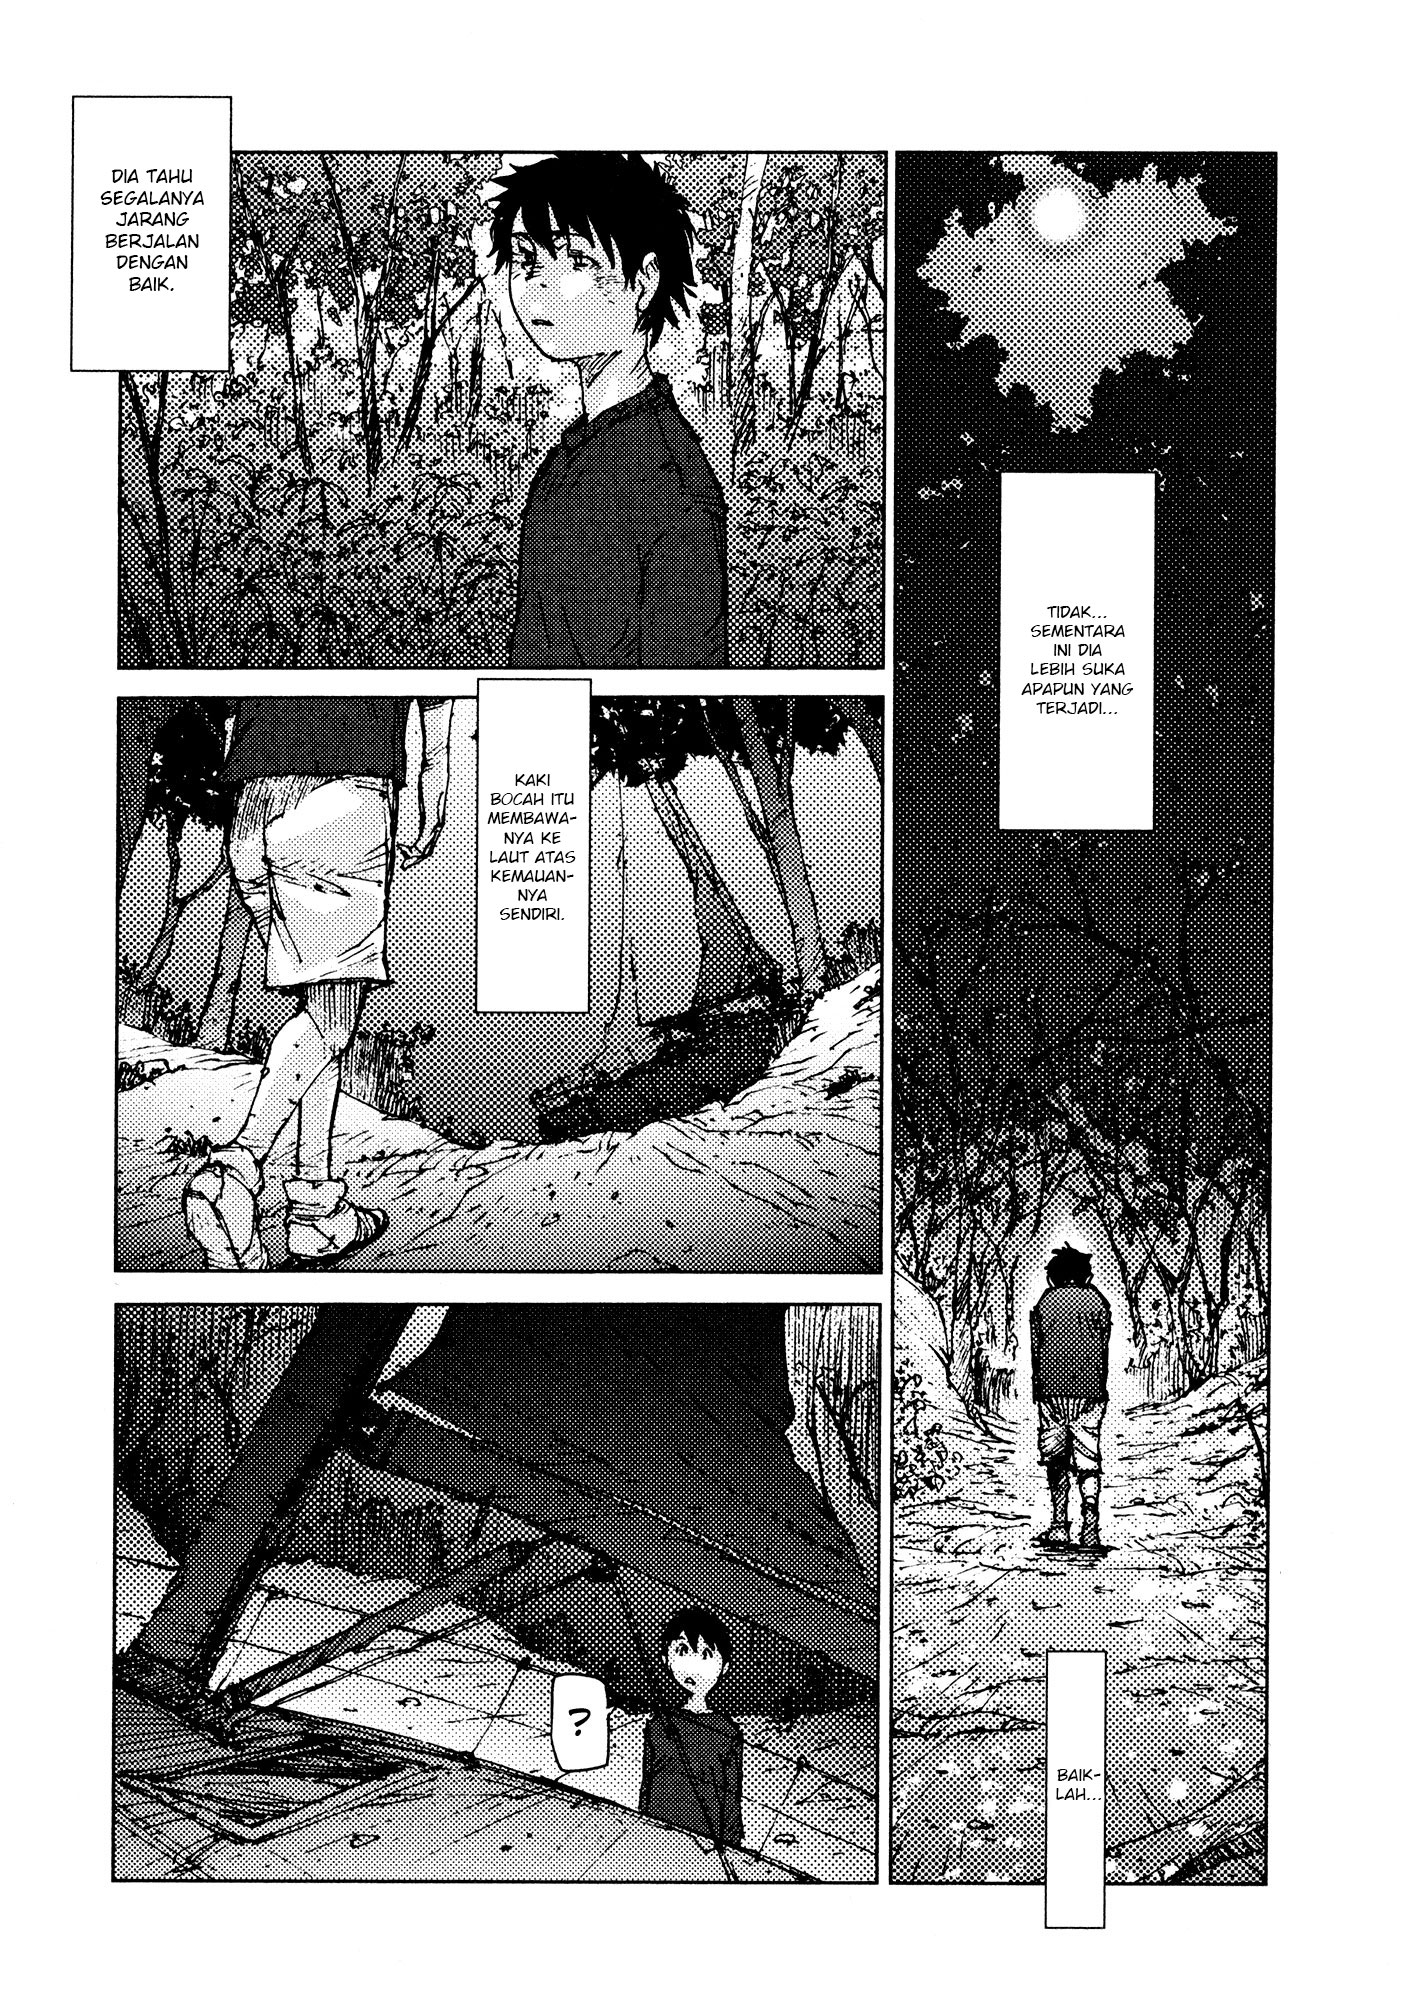 Survival: Shounen S no Kiroku Chapter 09